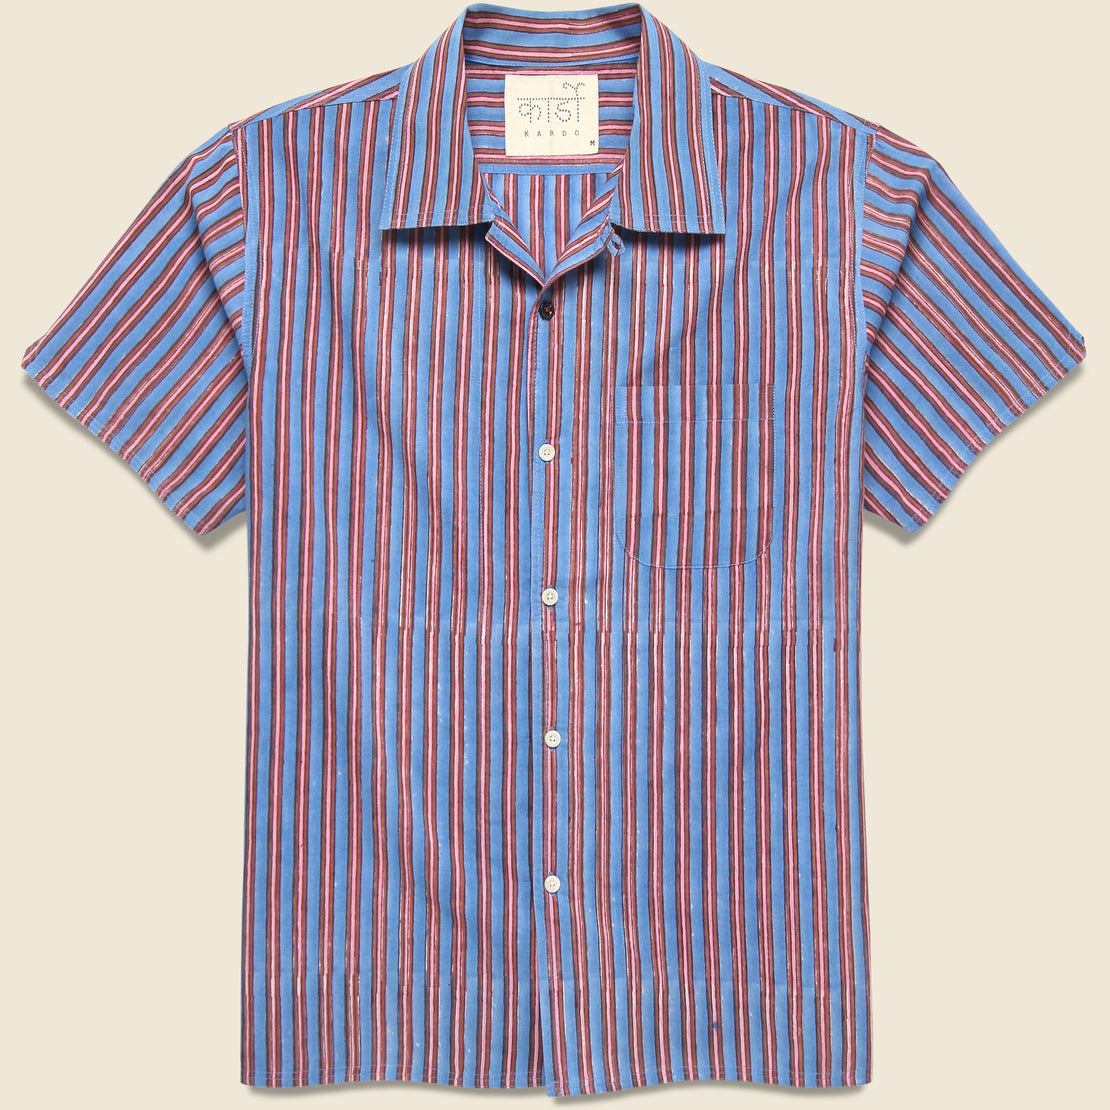 Kardo Striped Block Print Shirt - Indigo